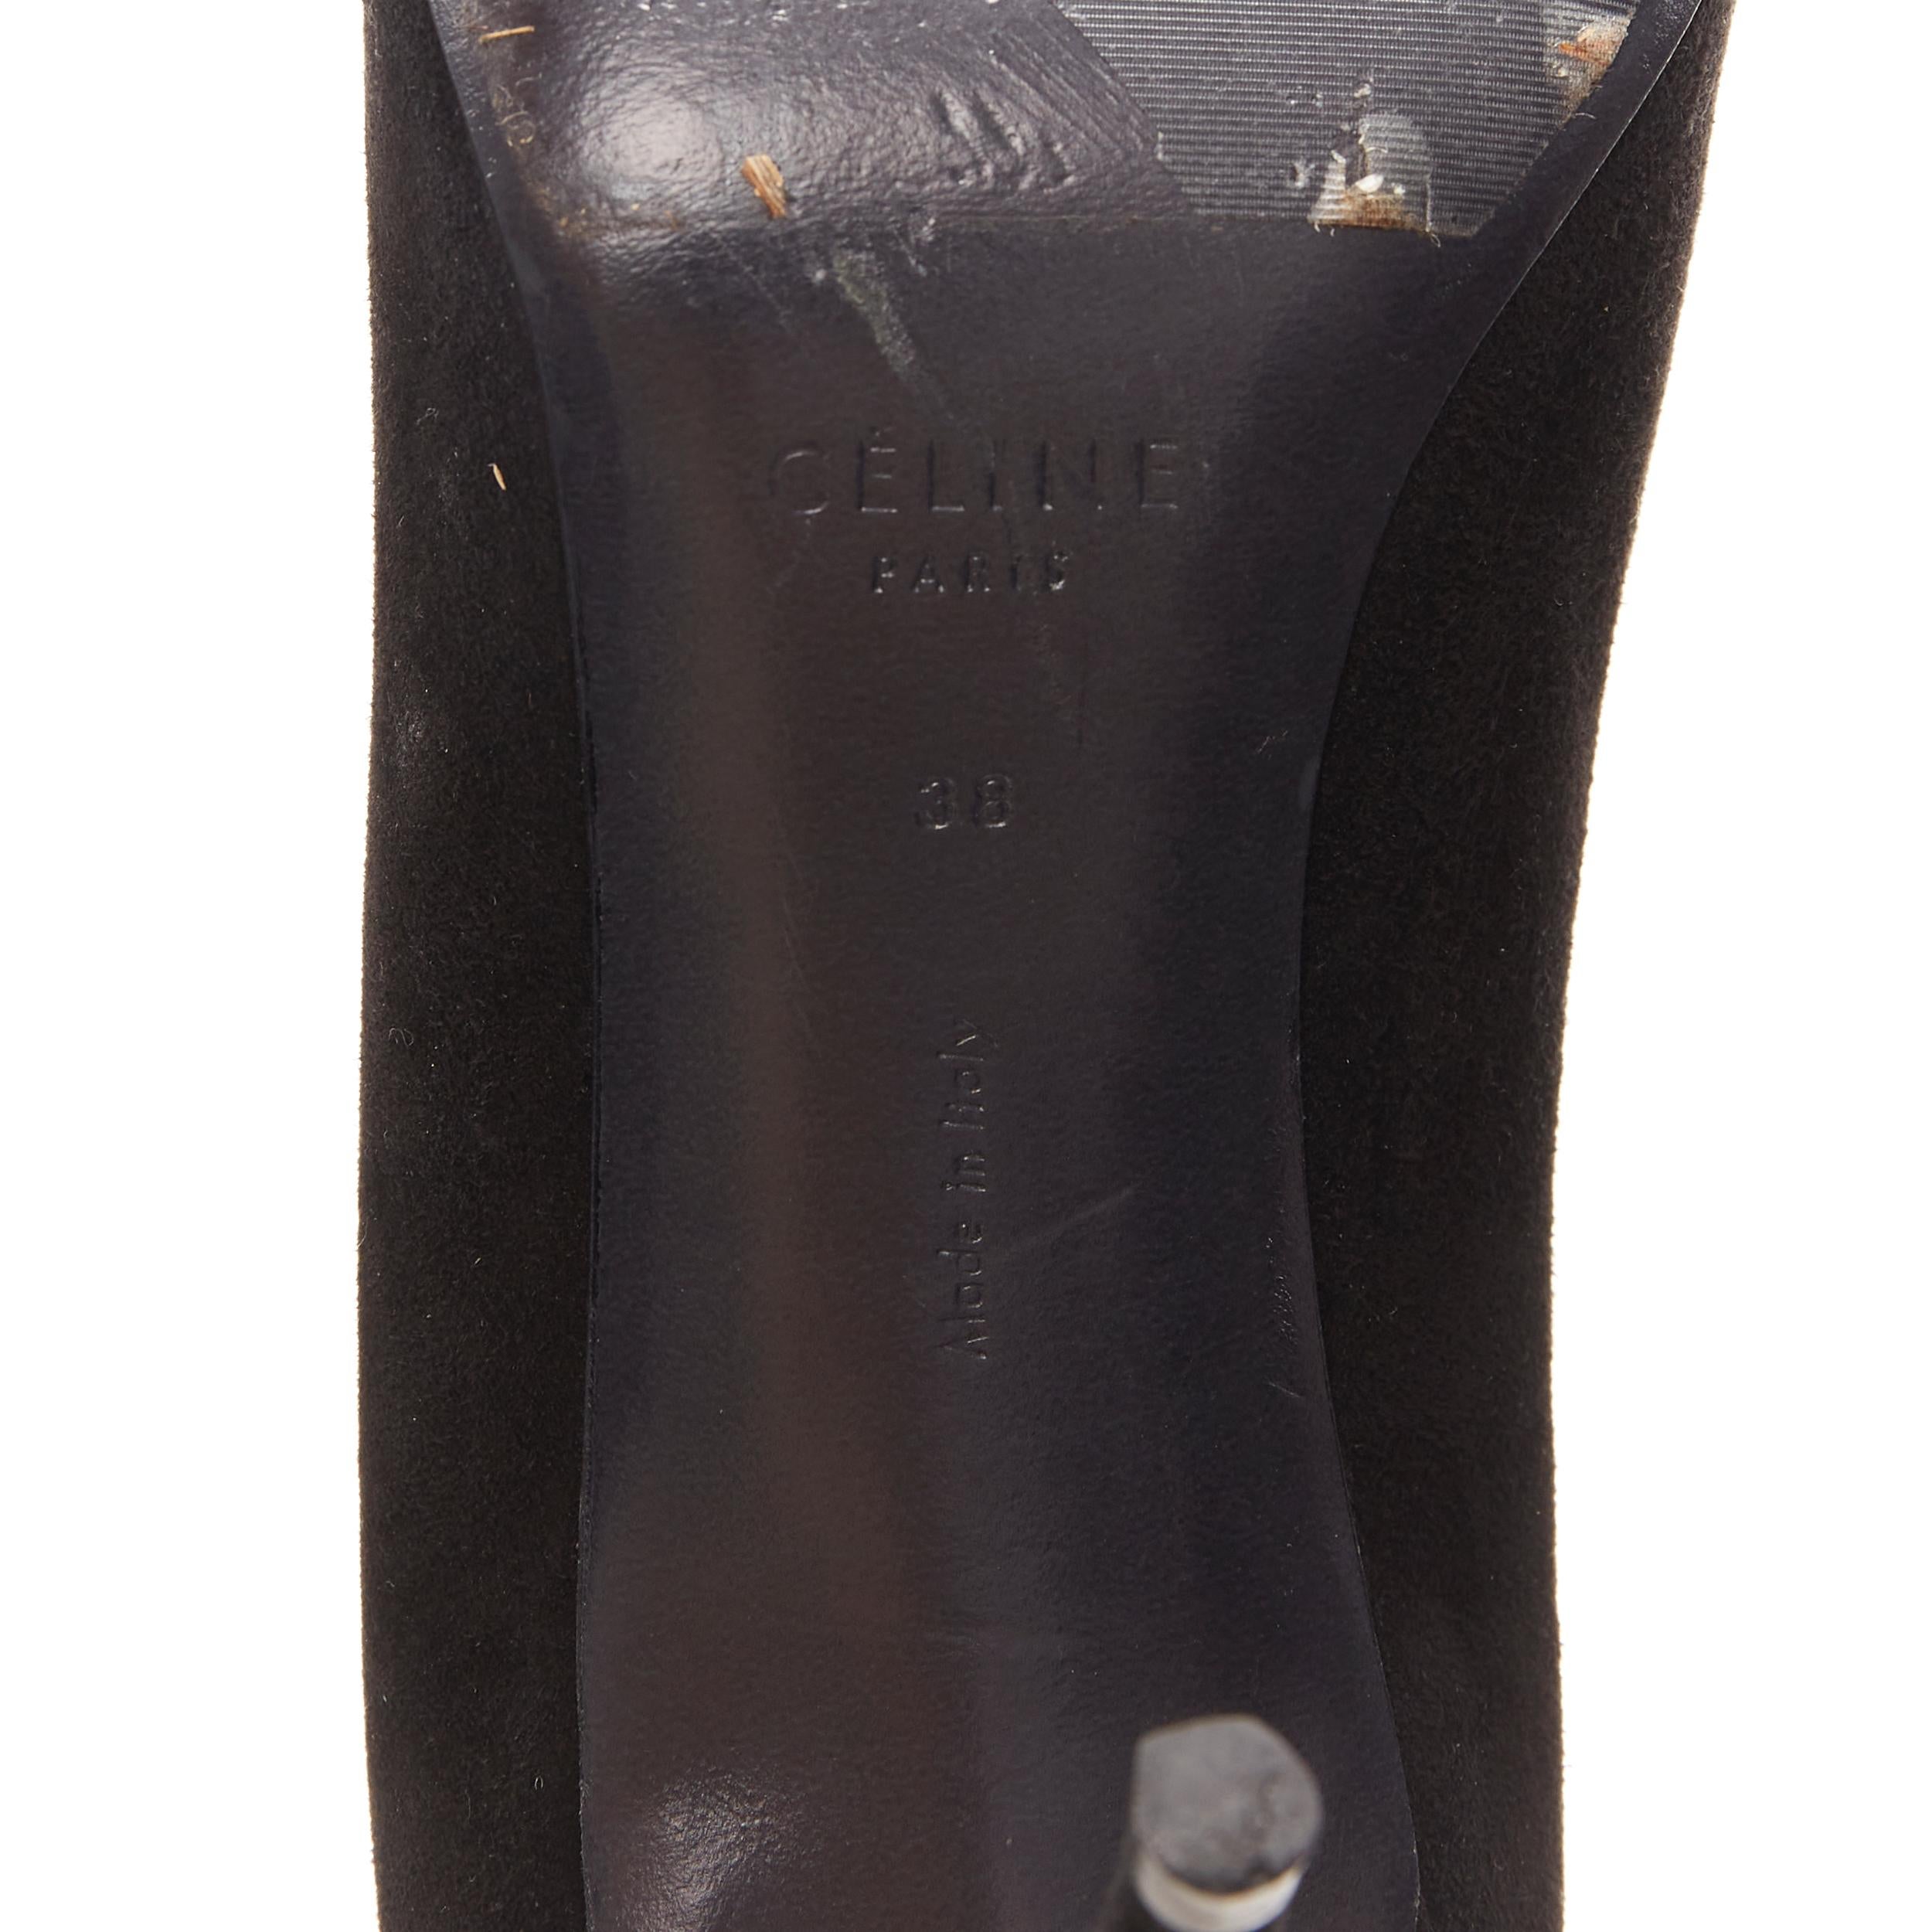 OLD CELINE PHOEBE PHILO black suede leather point tie pigalle stiletto pump EU38 For Sale 4